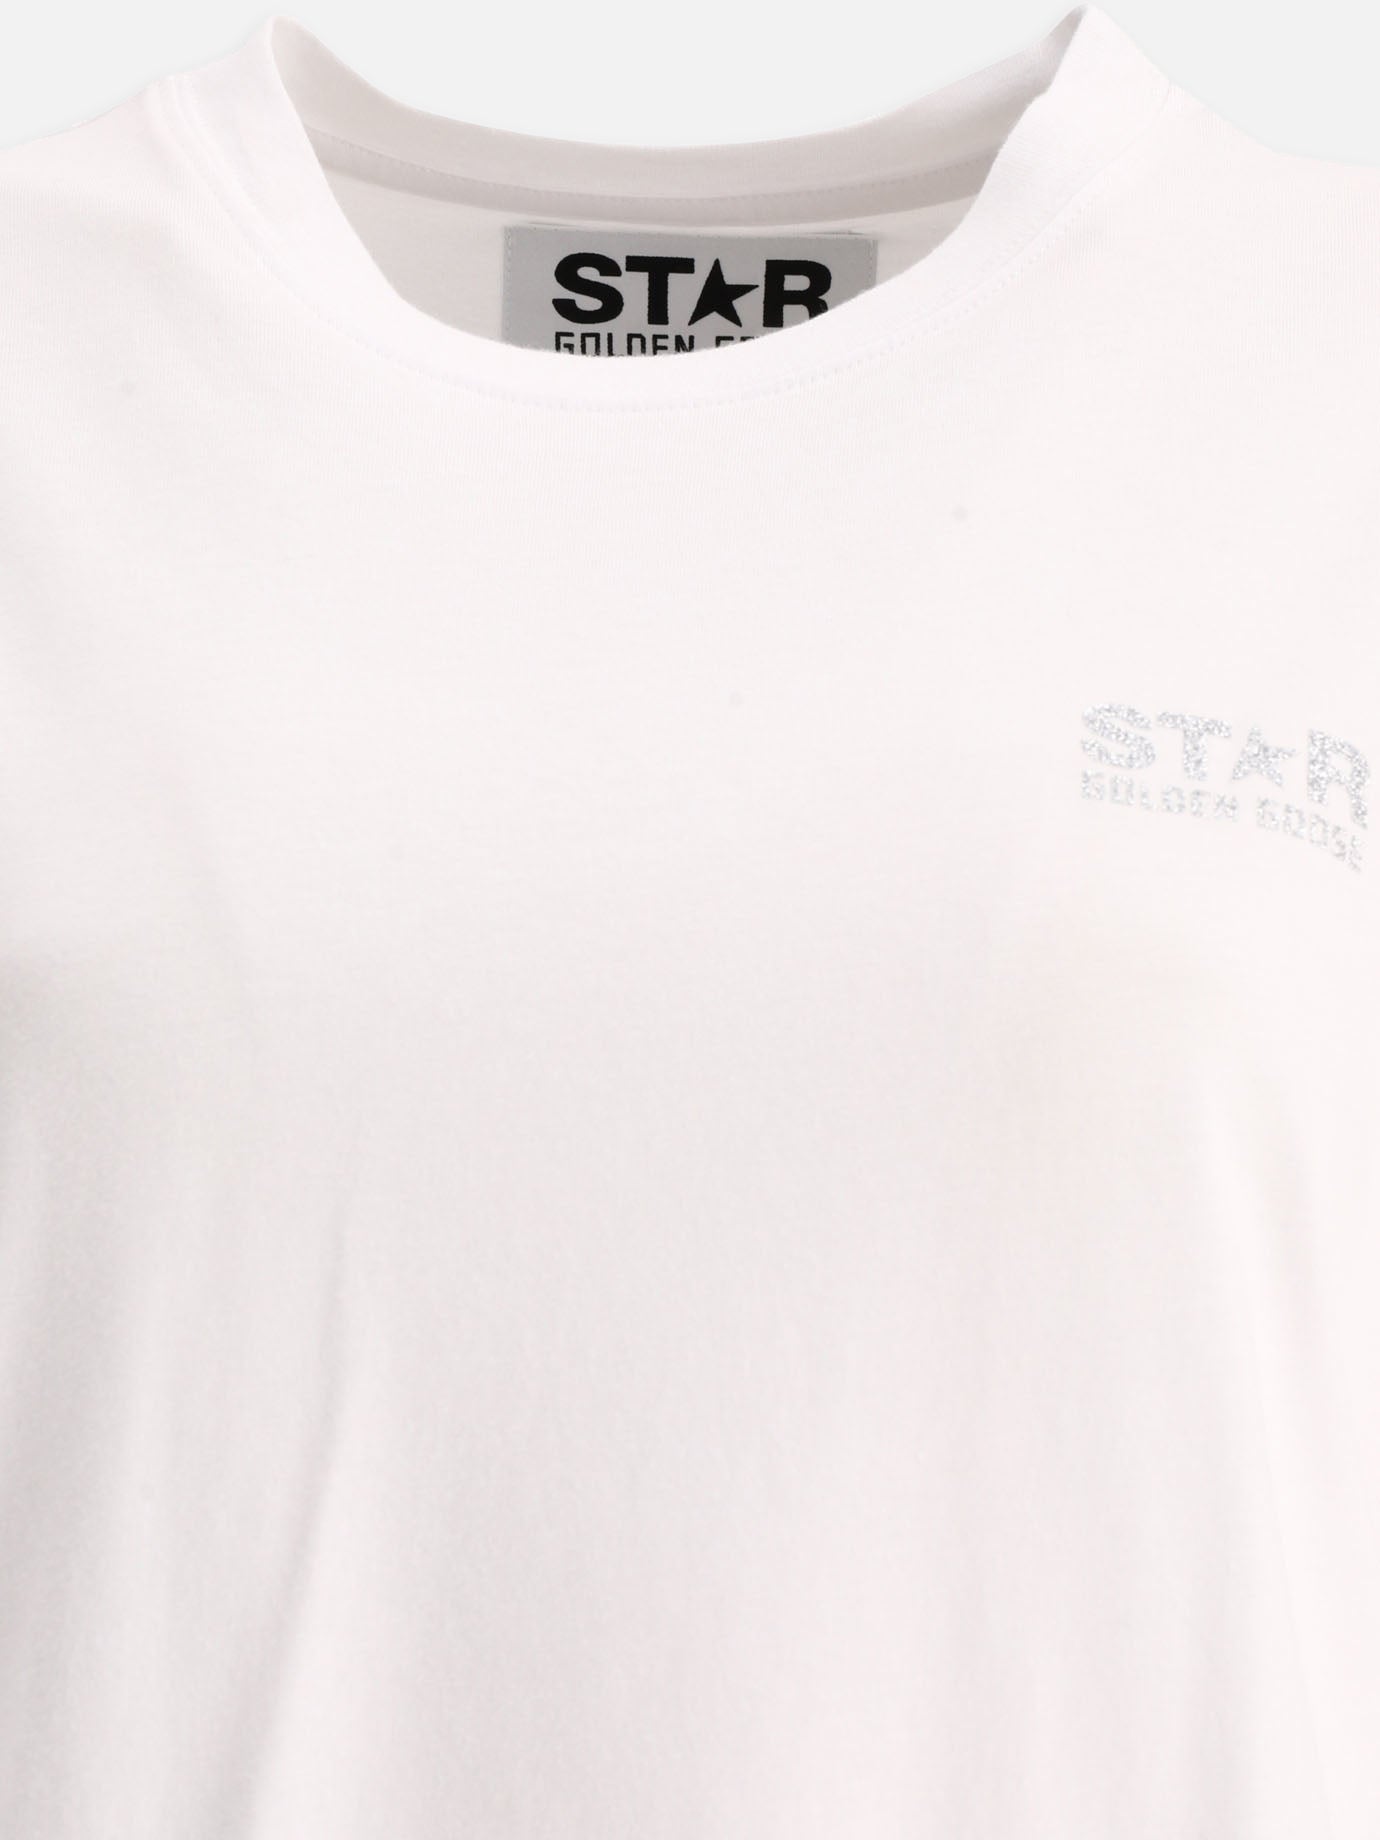 "Star" t-shirt